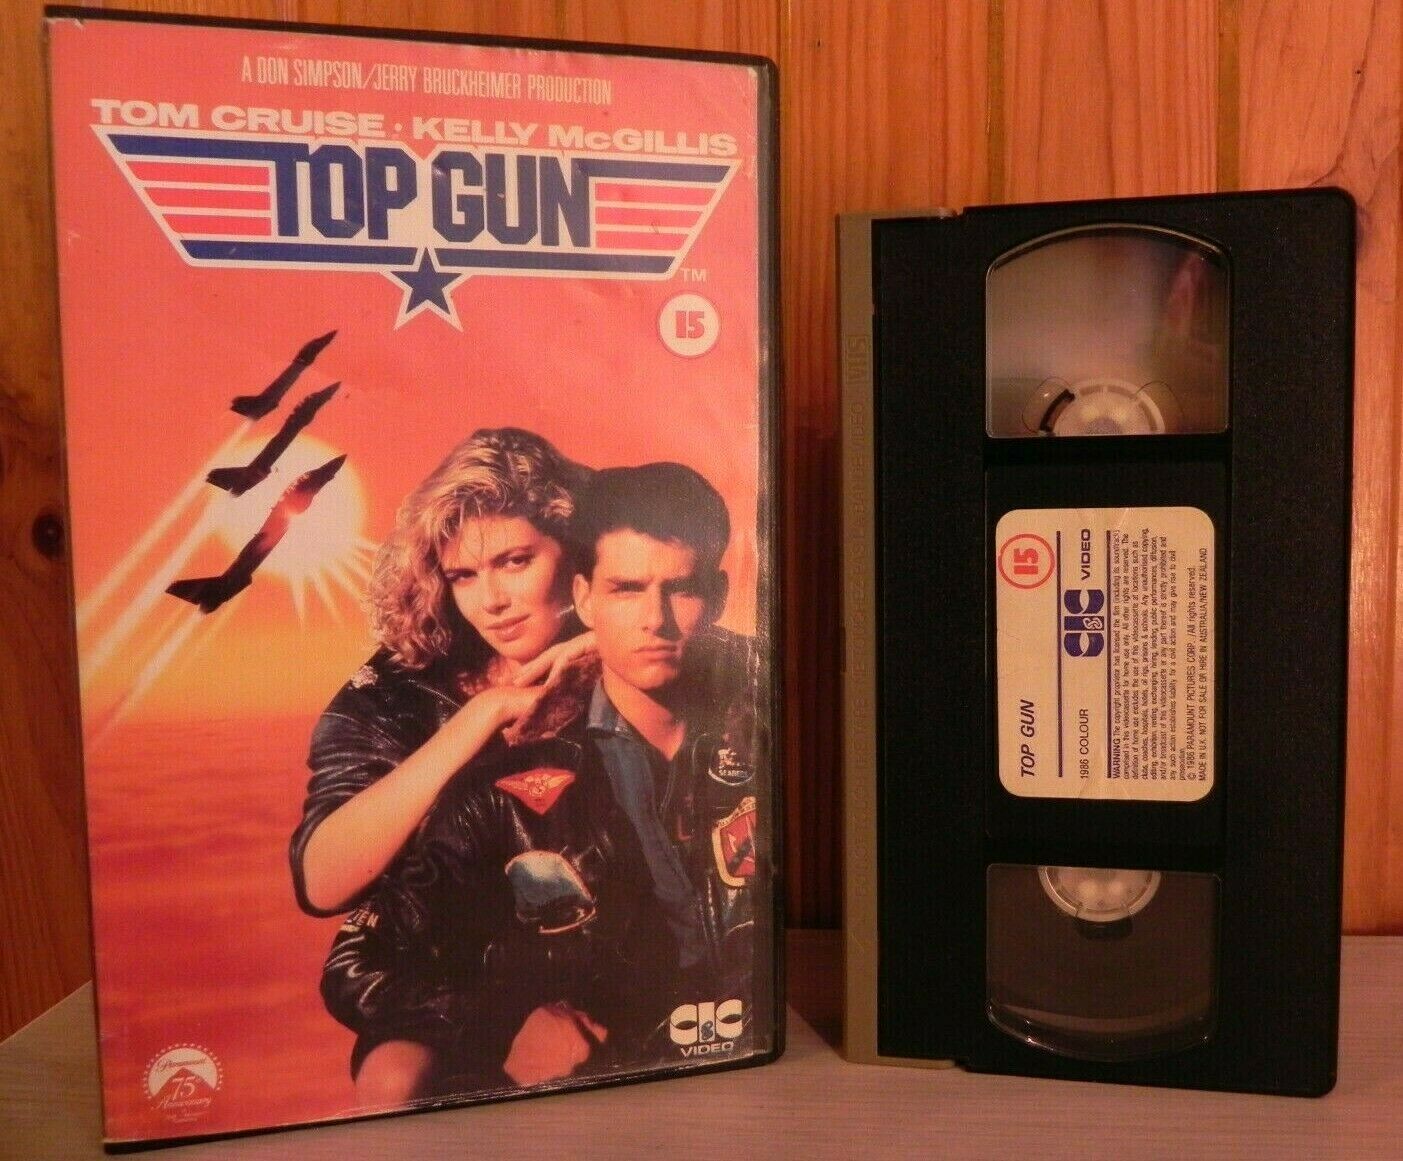 Top Gun (1987); [CIC Large Box] Cult Action - Tom Cruise / Kelly McGillis - VHS-